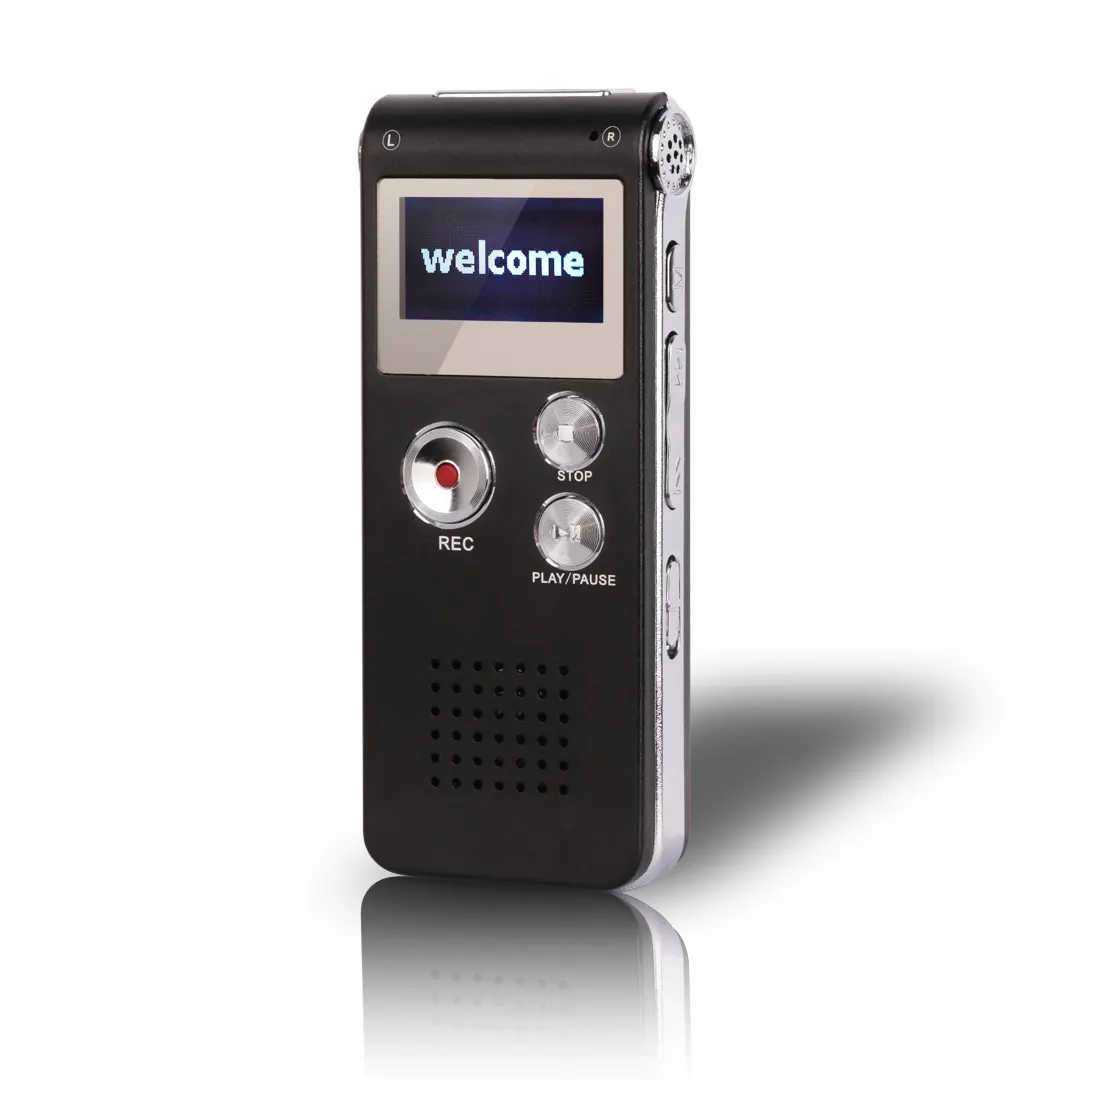 2020 AOMAGO حار بيع مسجل صوت رقمي مع مفتاح واحد تسجيل في اجتماع عمل